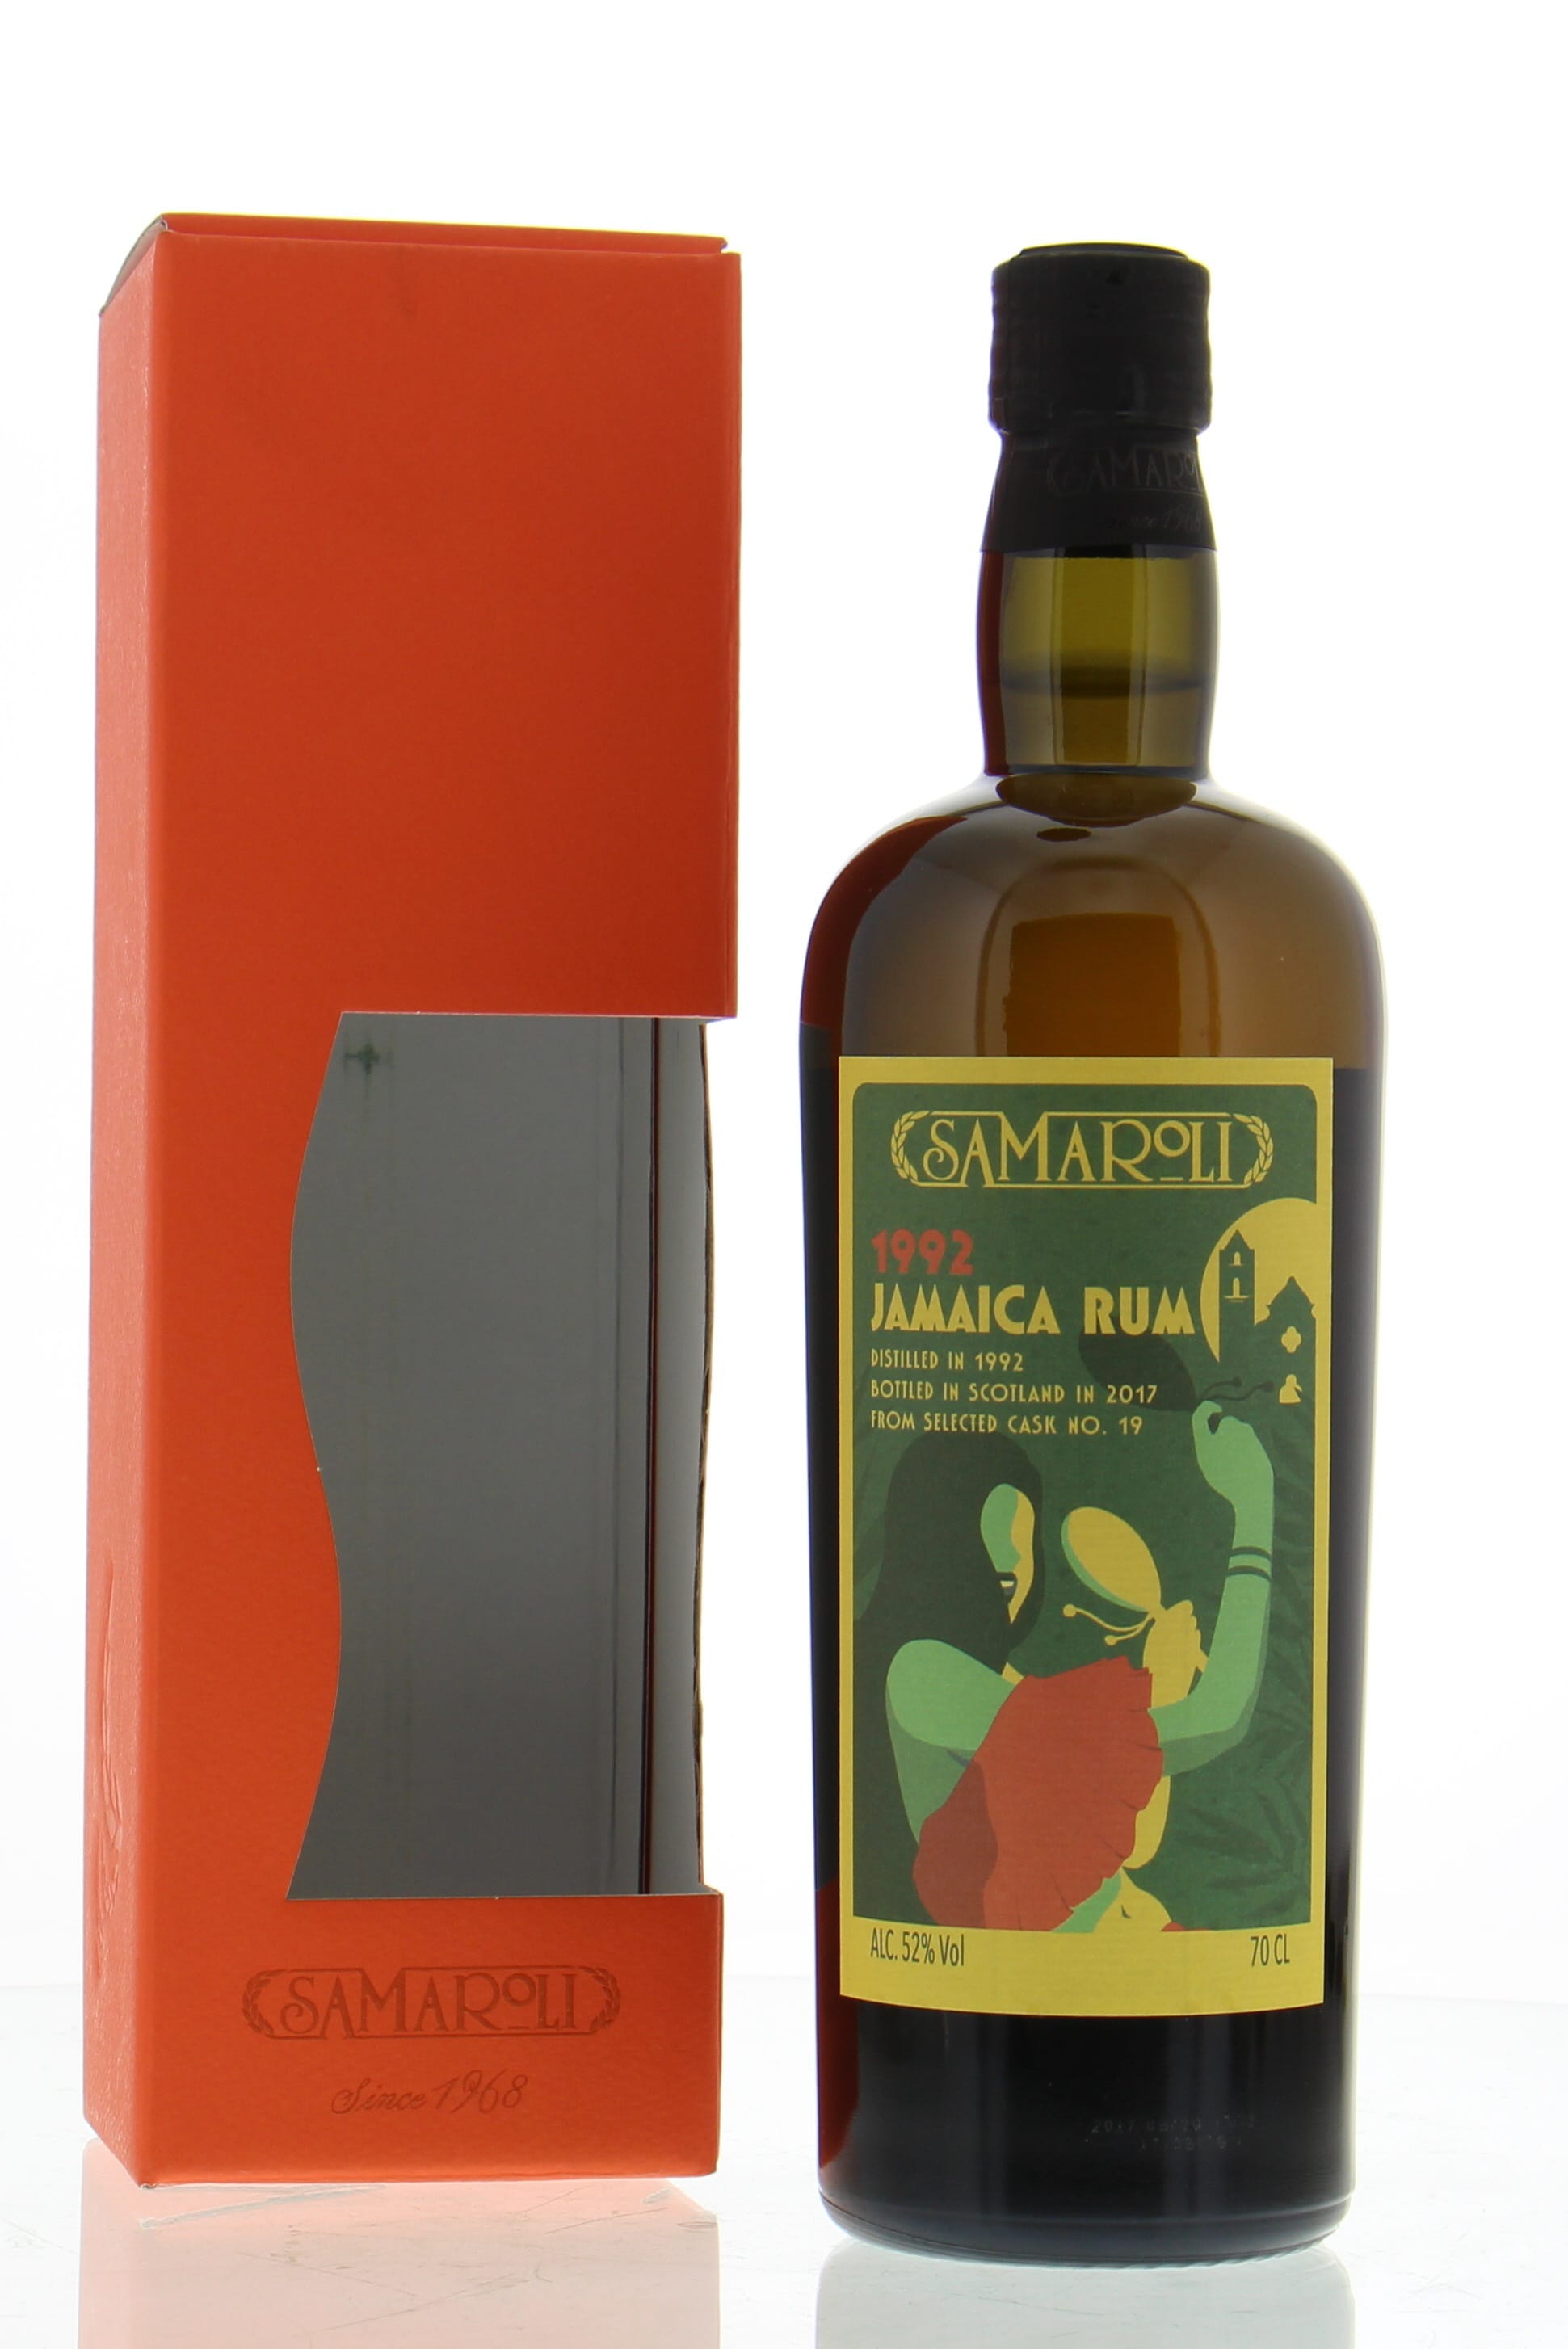 Samaroli - 1992 Jamaica Rum Cask 19 52% 1992 In Original Carton